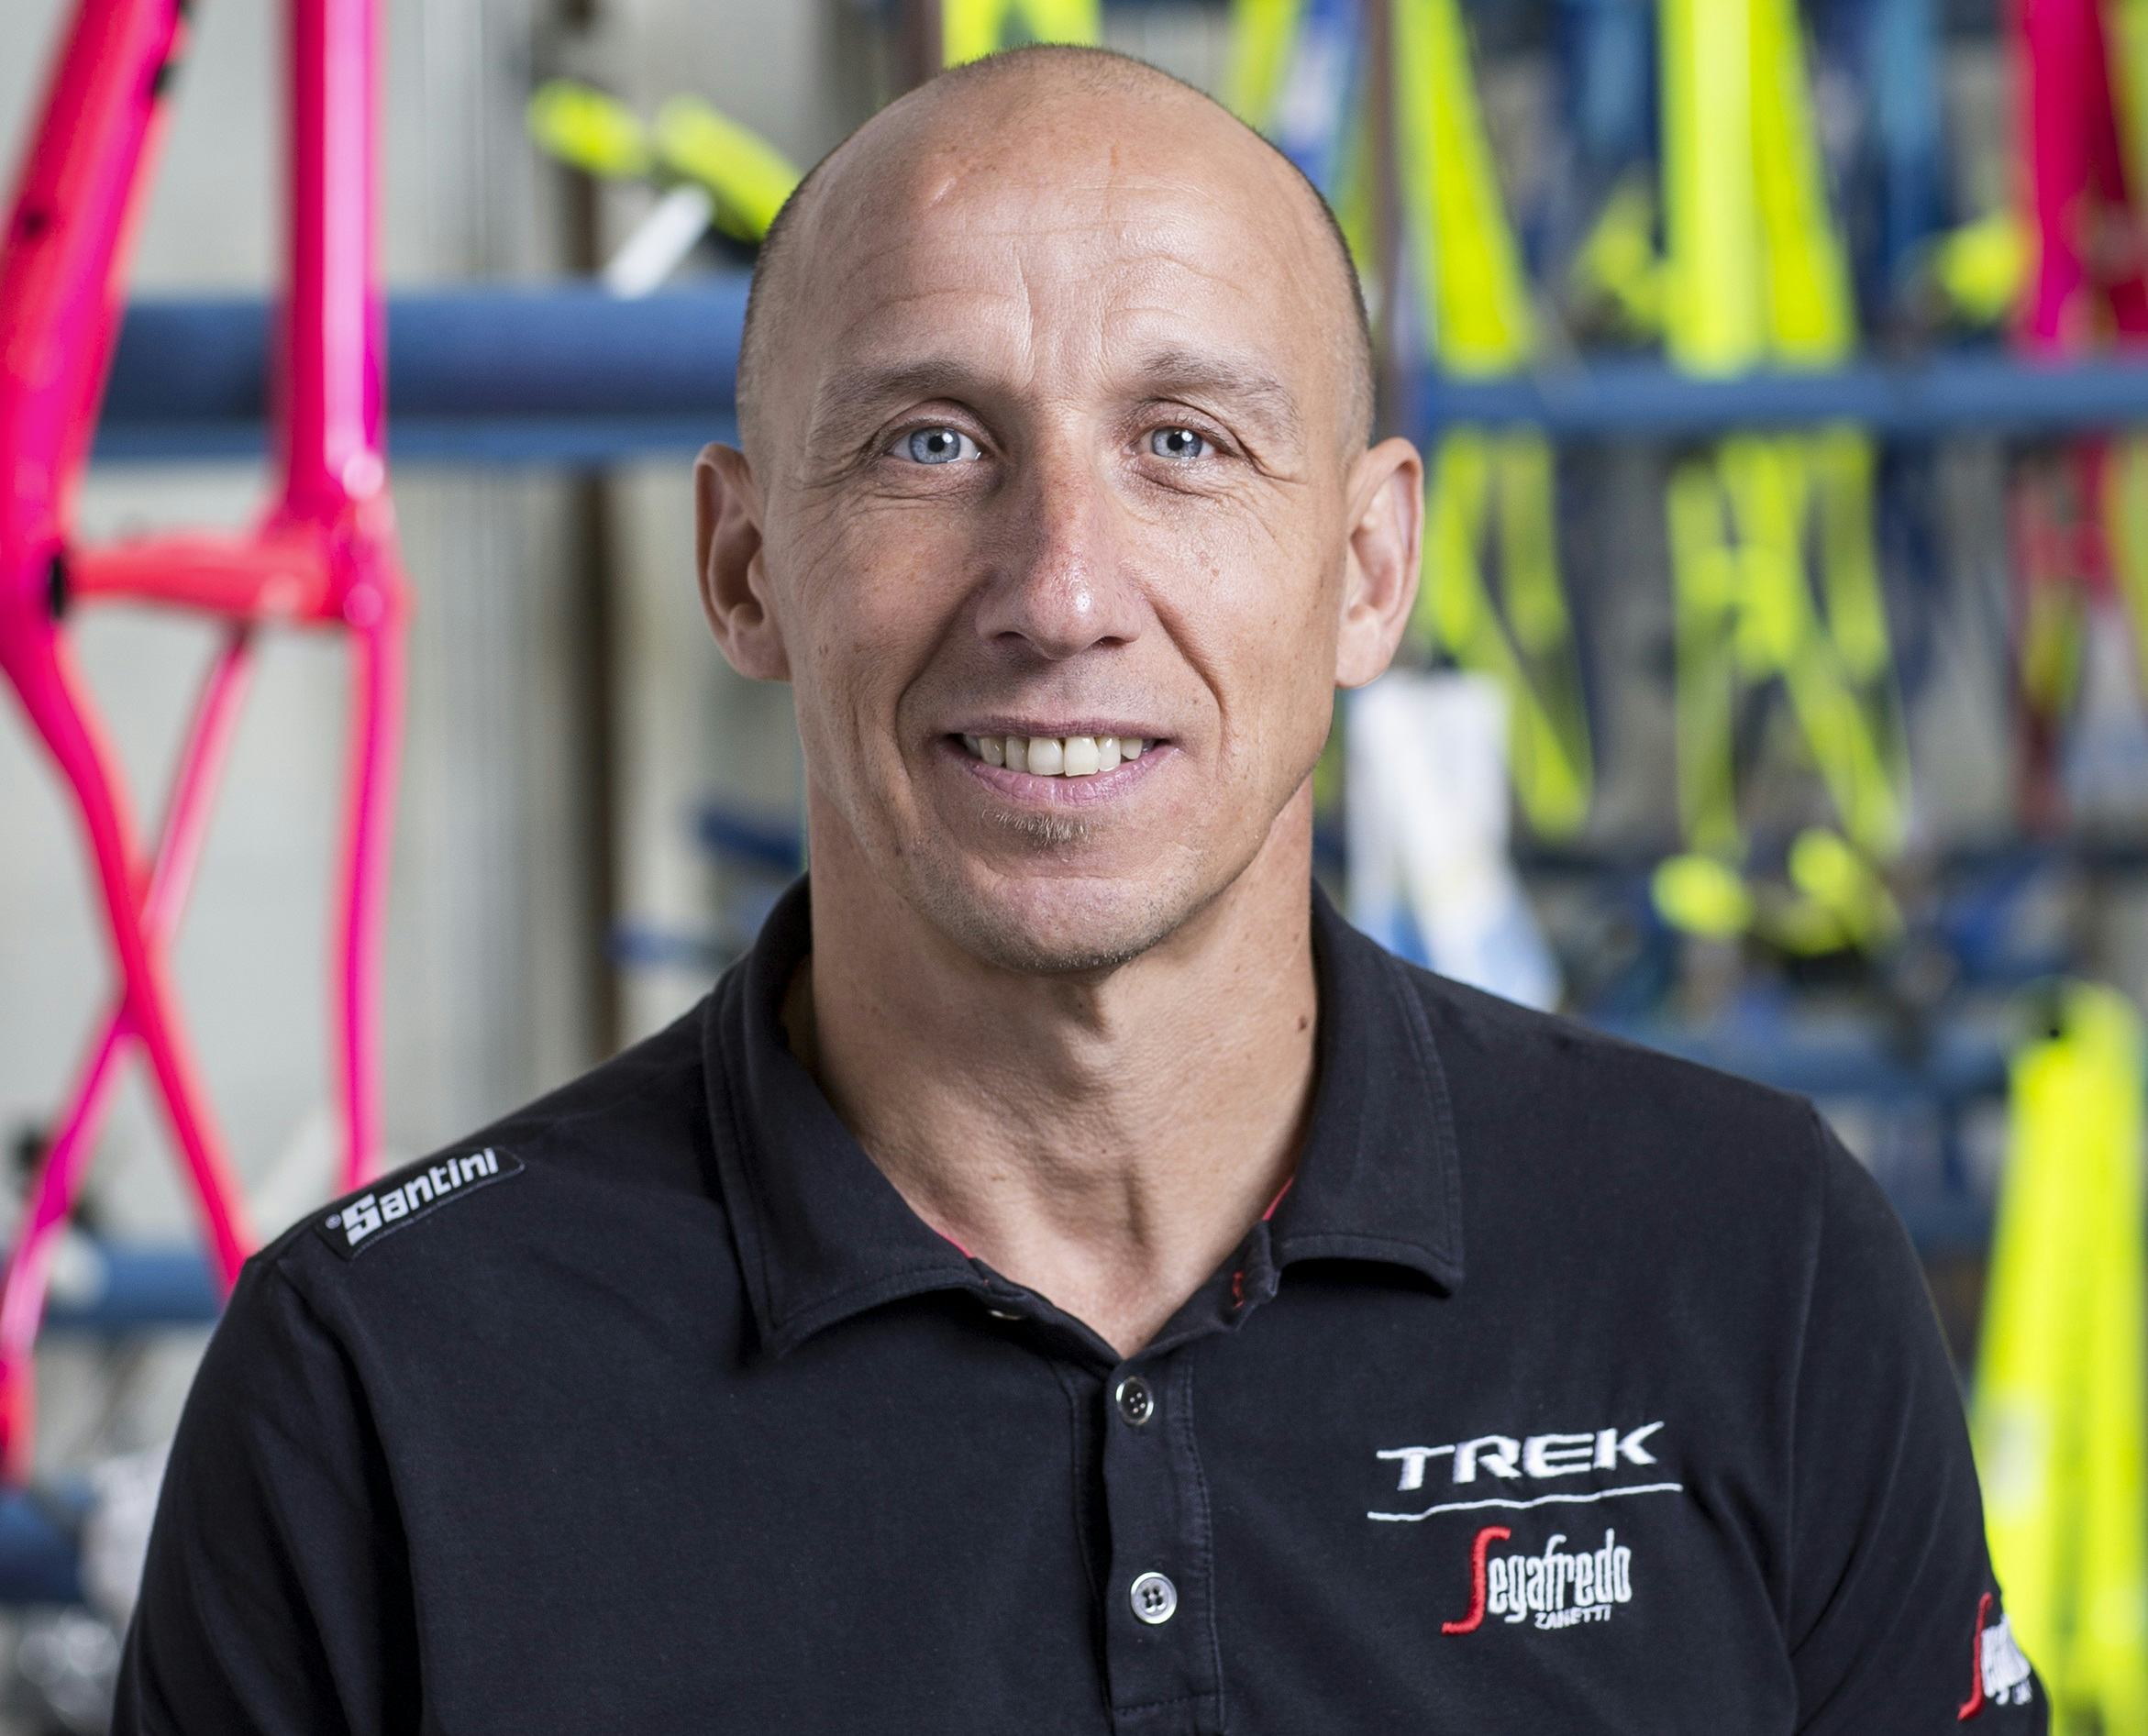 Trek Bicycle new Vice President of European Business, Harald Schmiedel. – Photo Trek